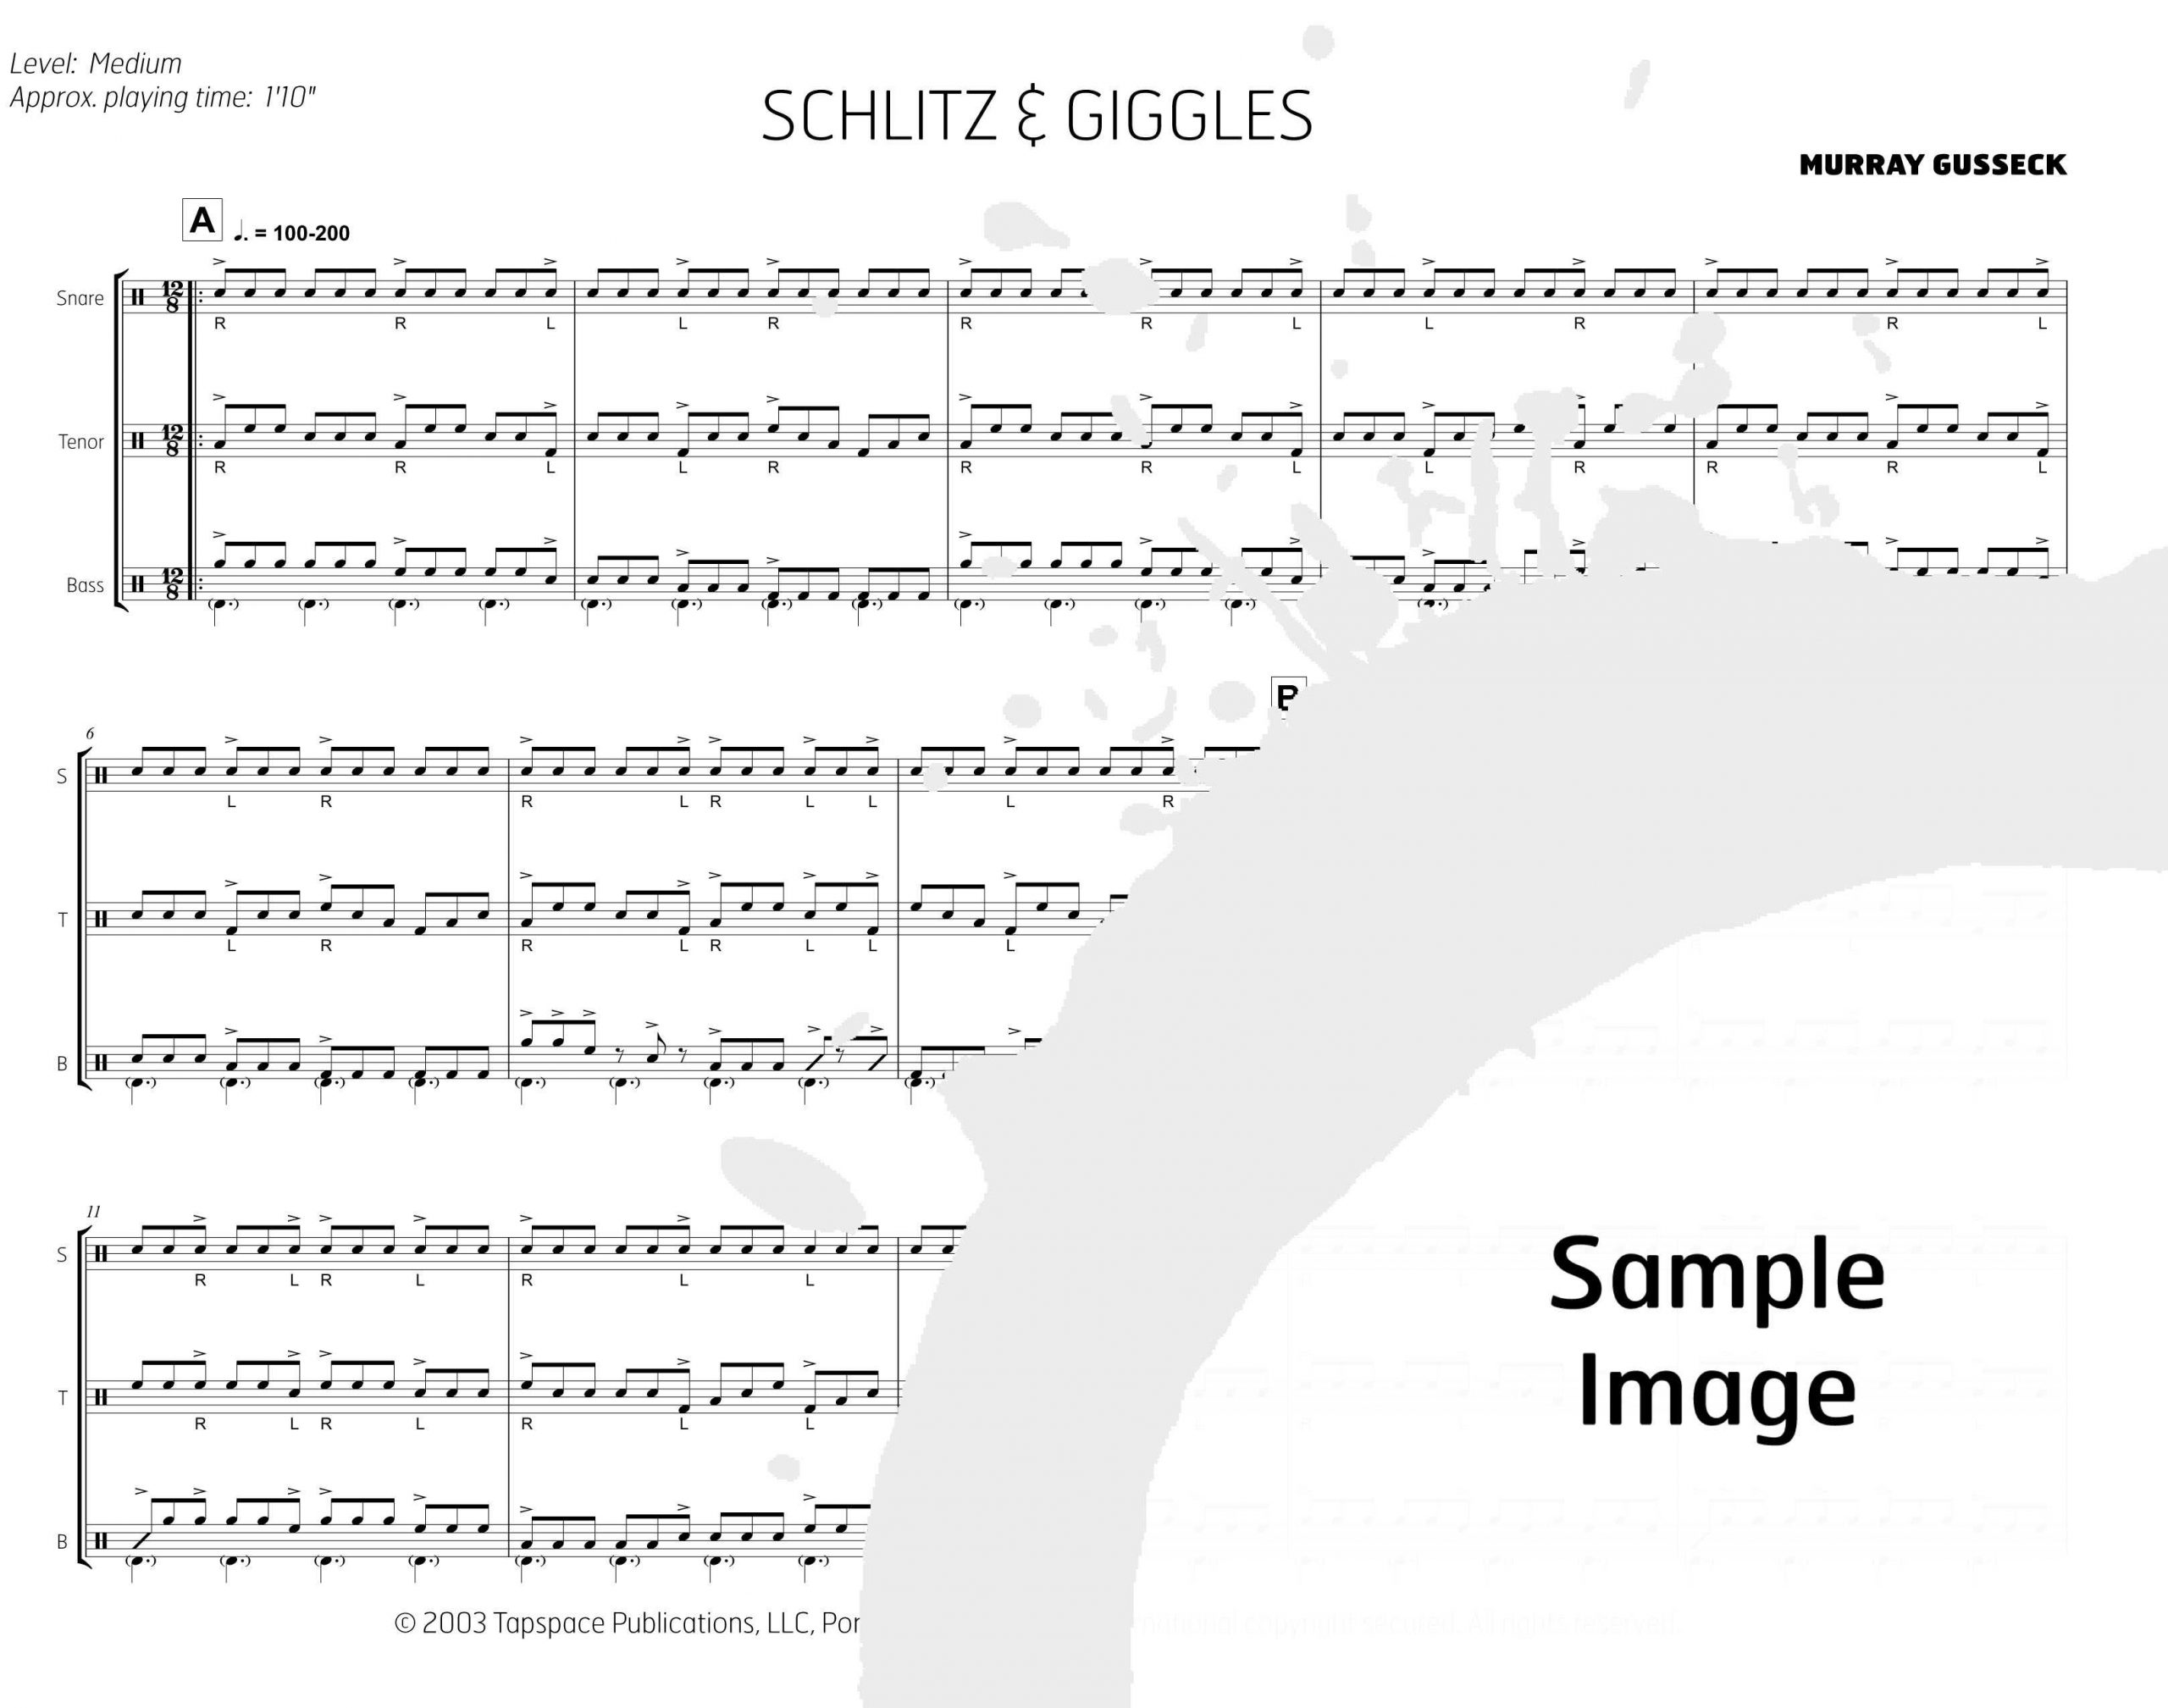 Schlitz & Giggles by Murray Gusseck